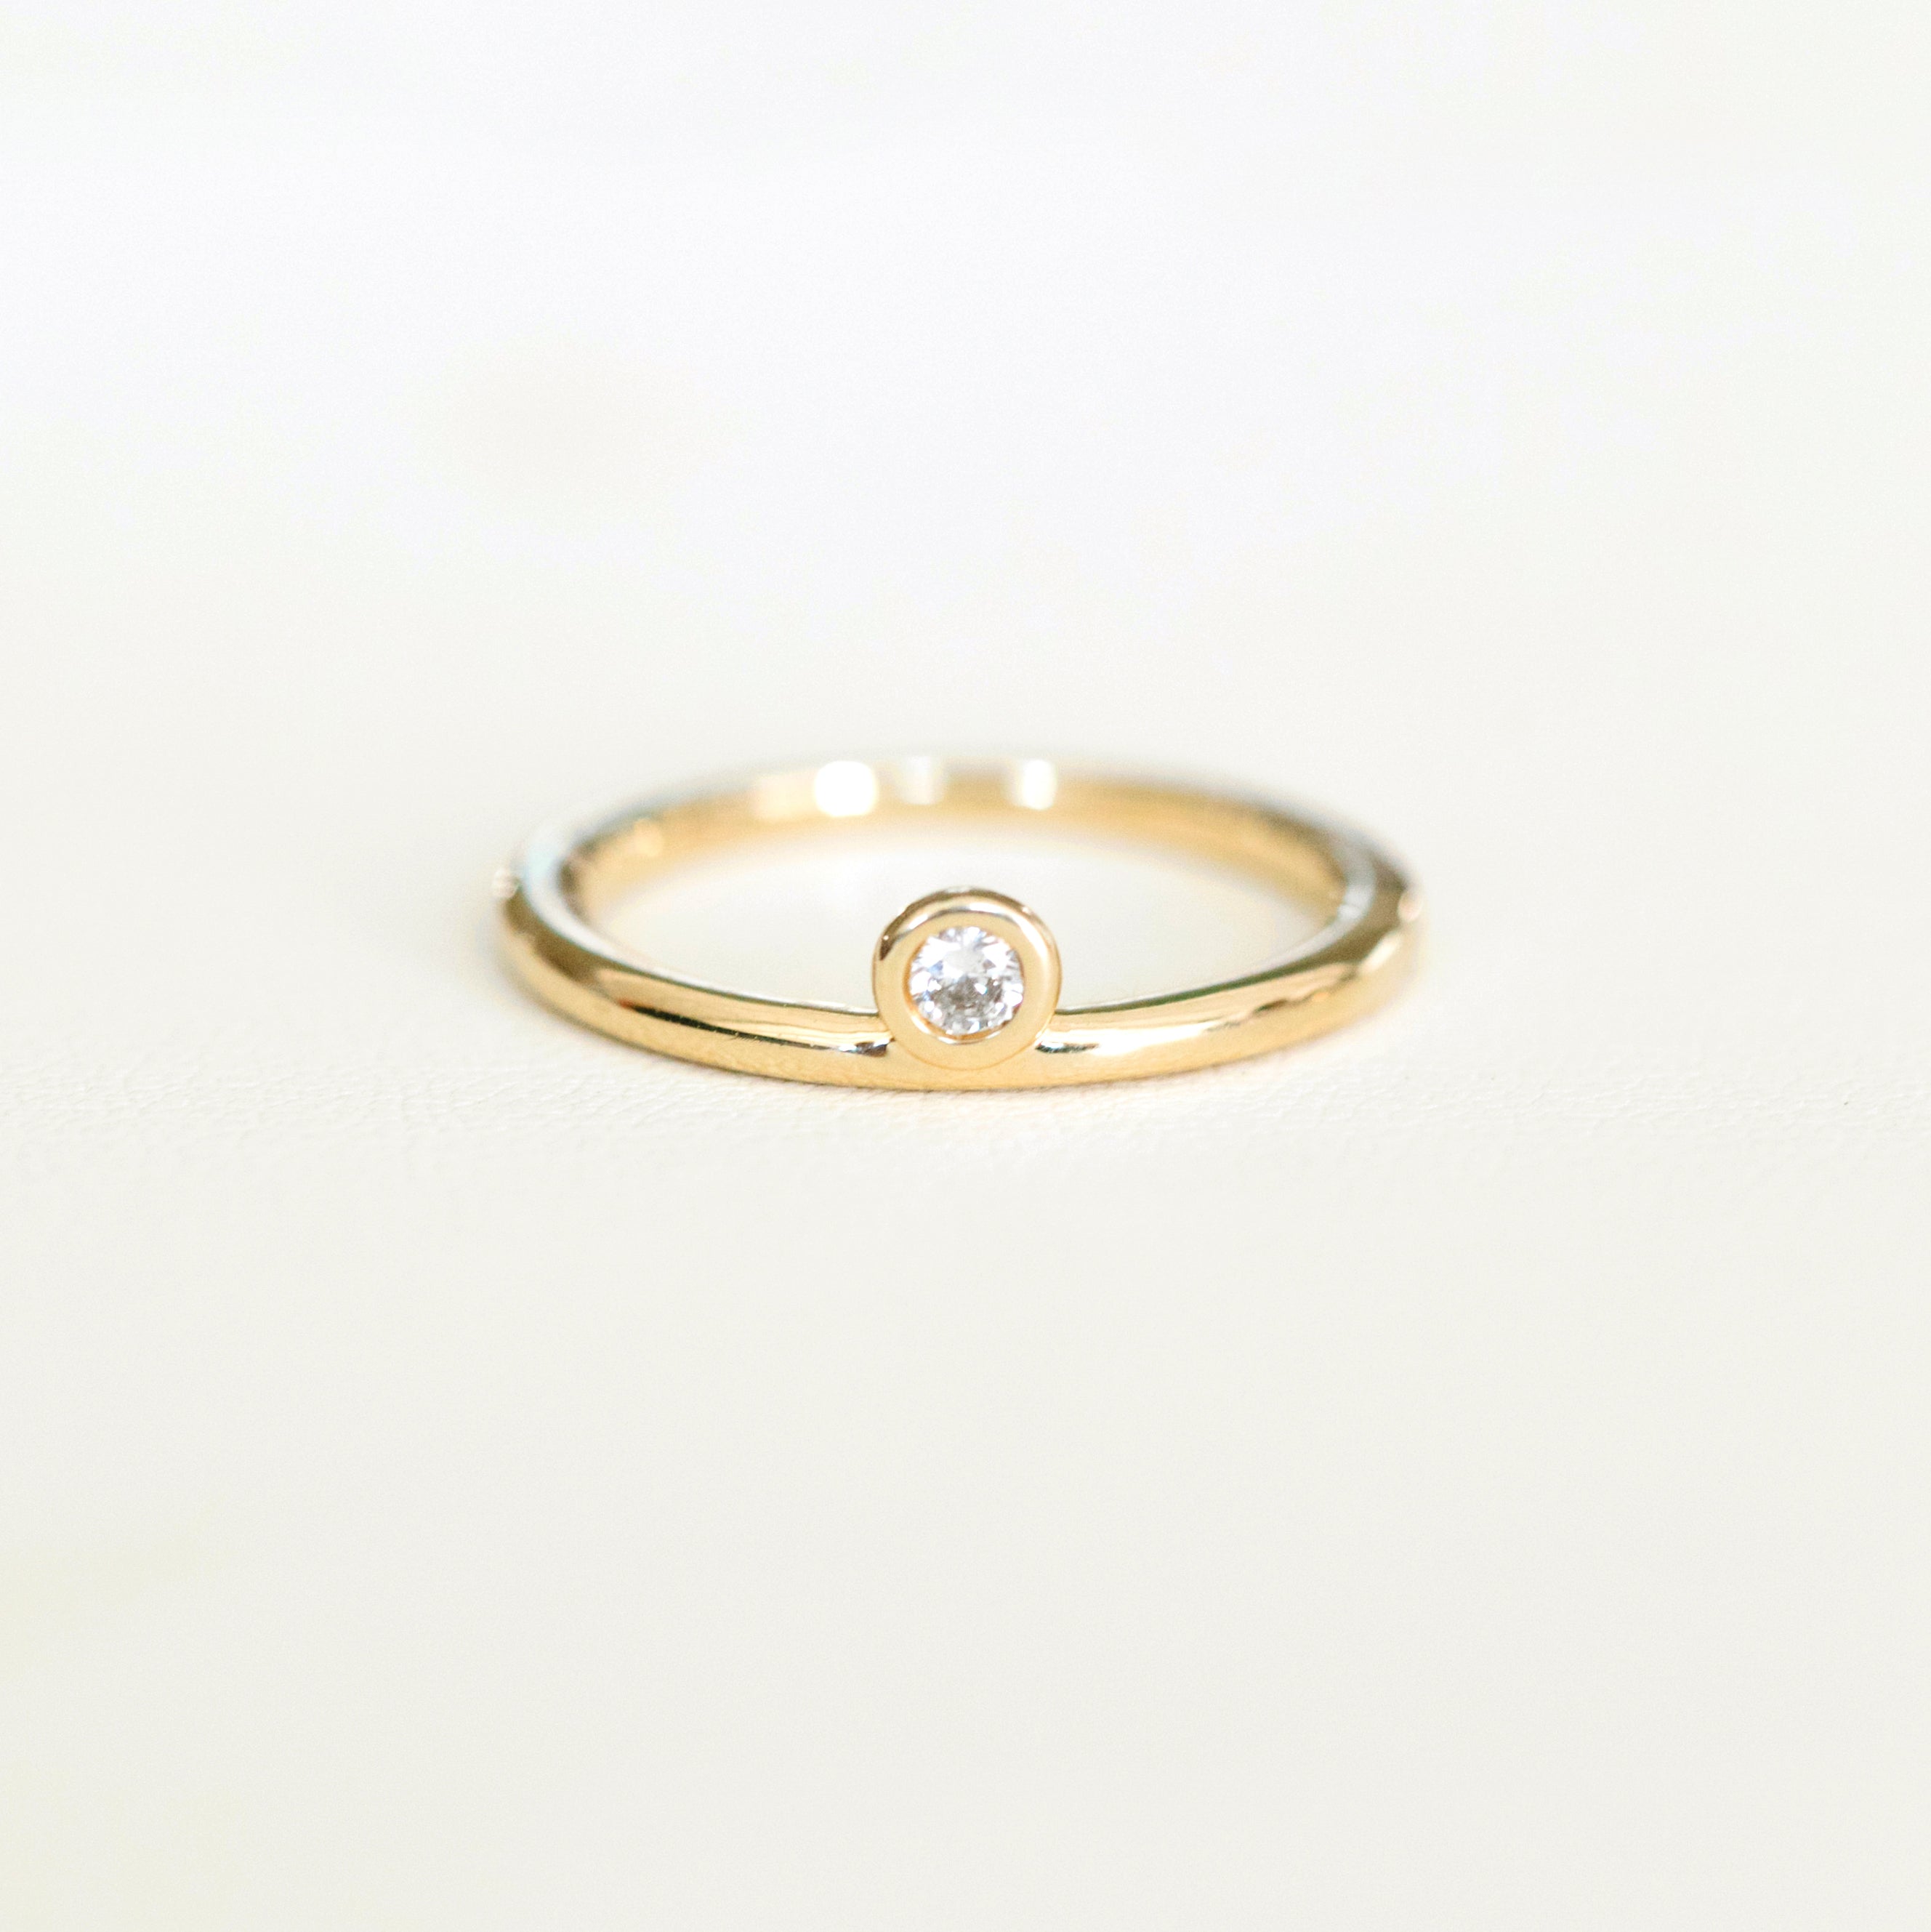 Minimal Modern Diamond Ring with Offset Stone